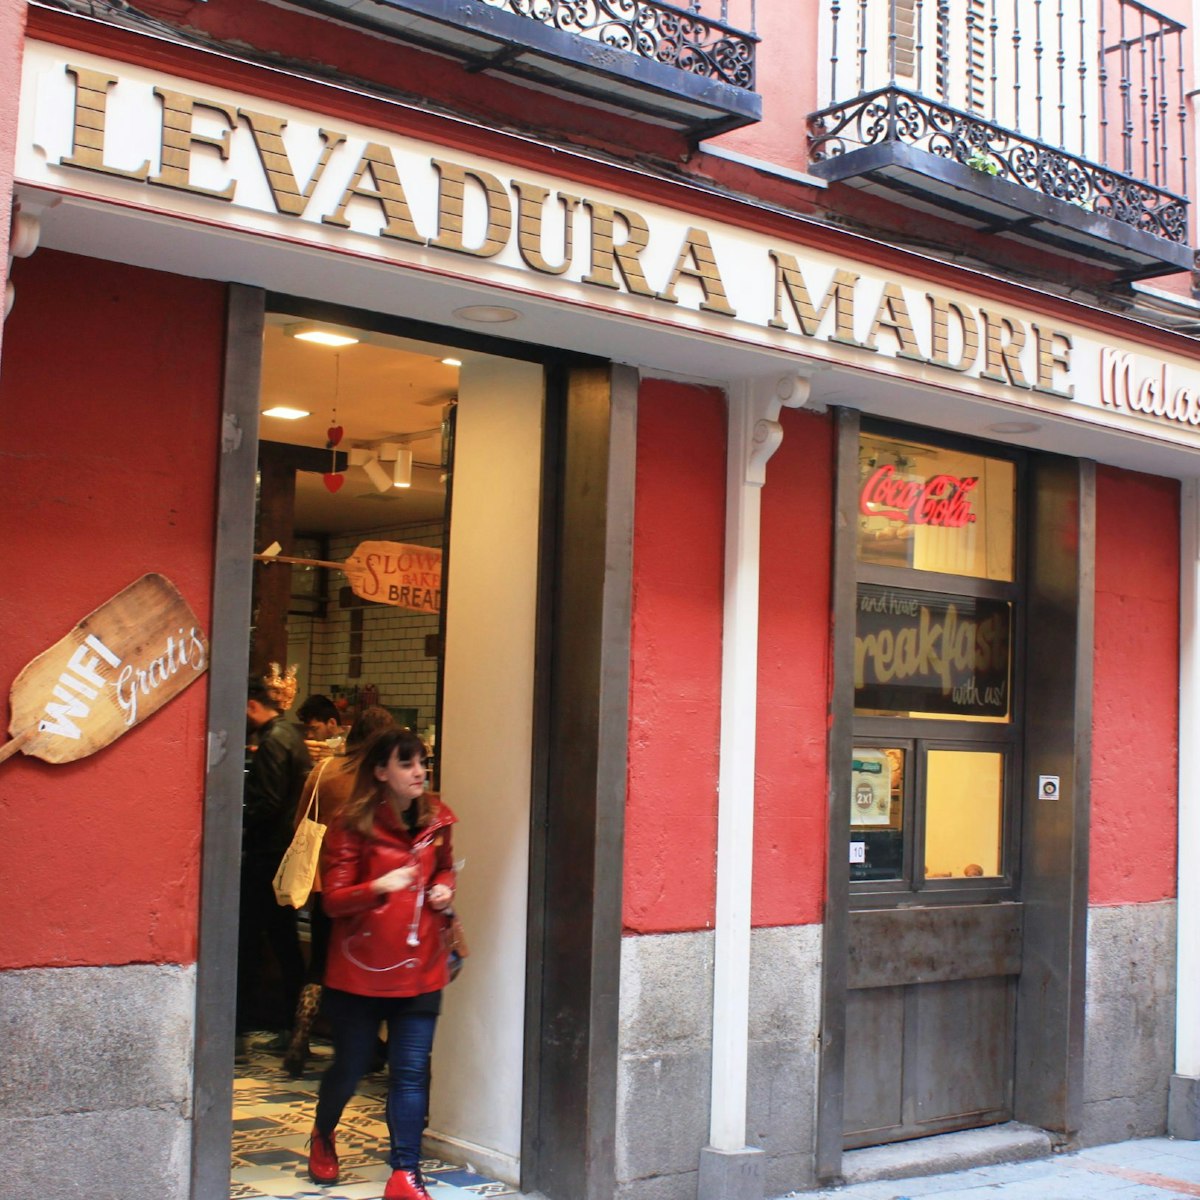 The bright red entrance to Levadura Madre Malasaña.